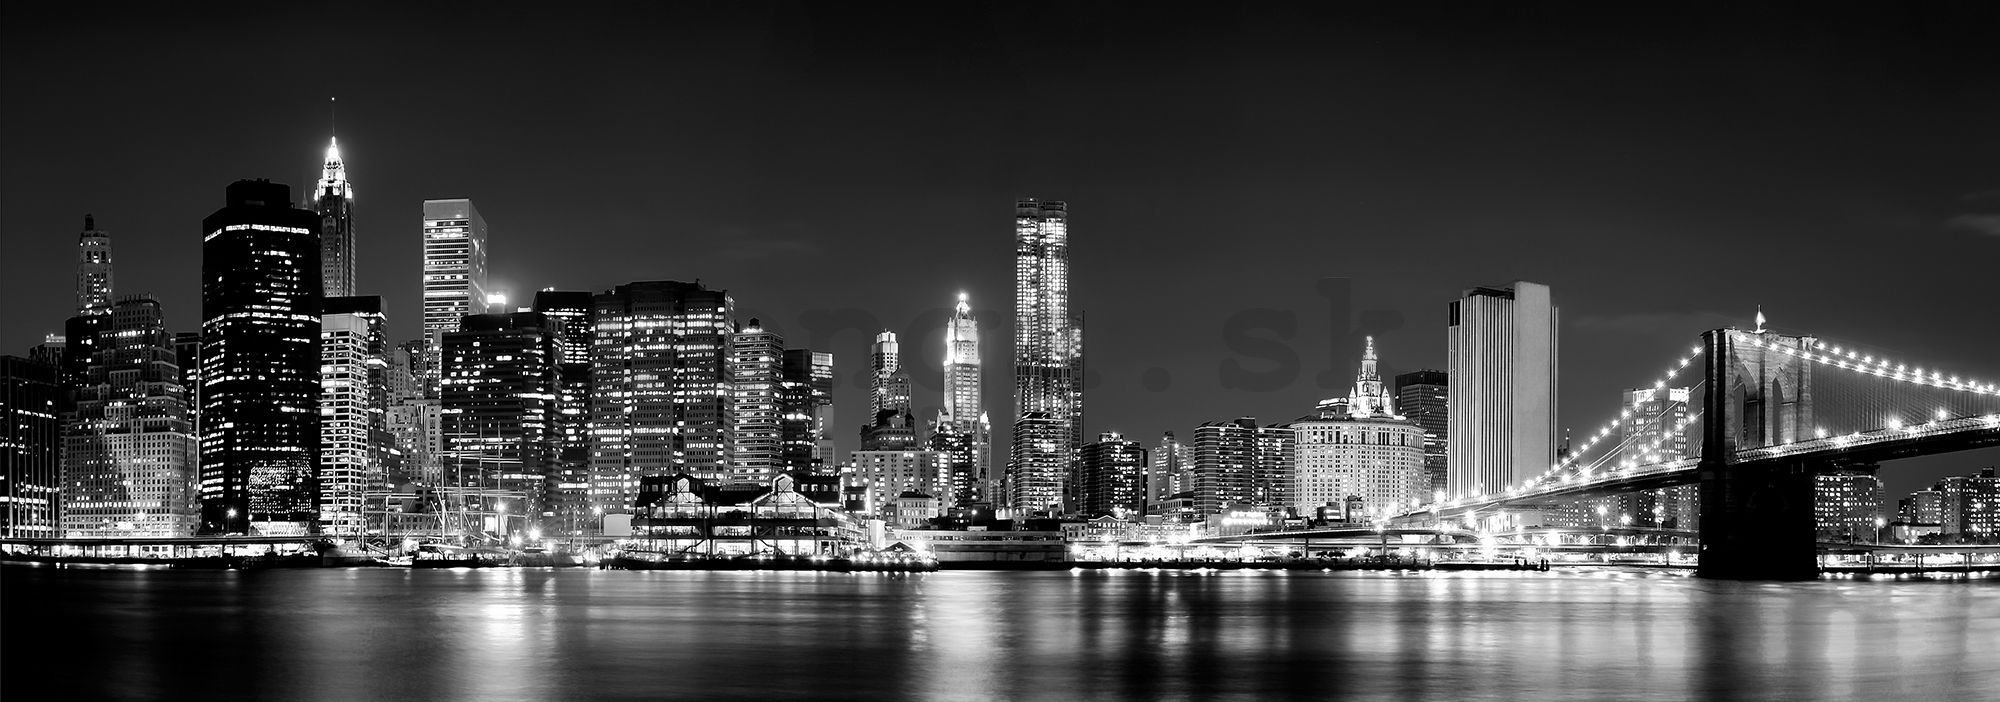 Fototapeta: N.Y. v noci (čiernobiely) - 624x219 cm